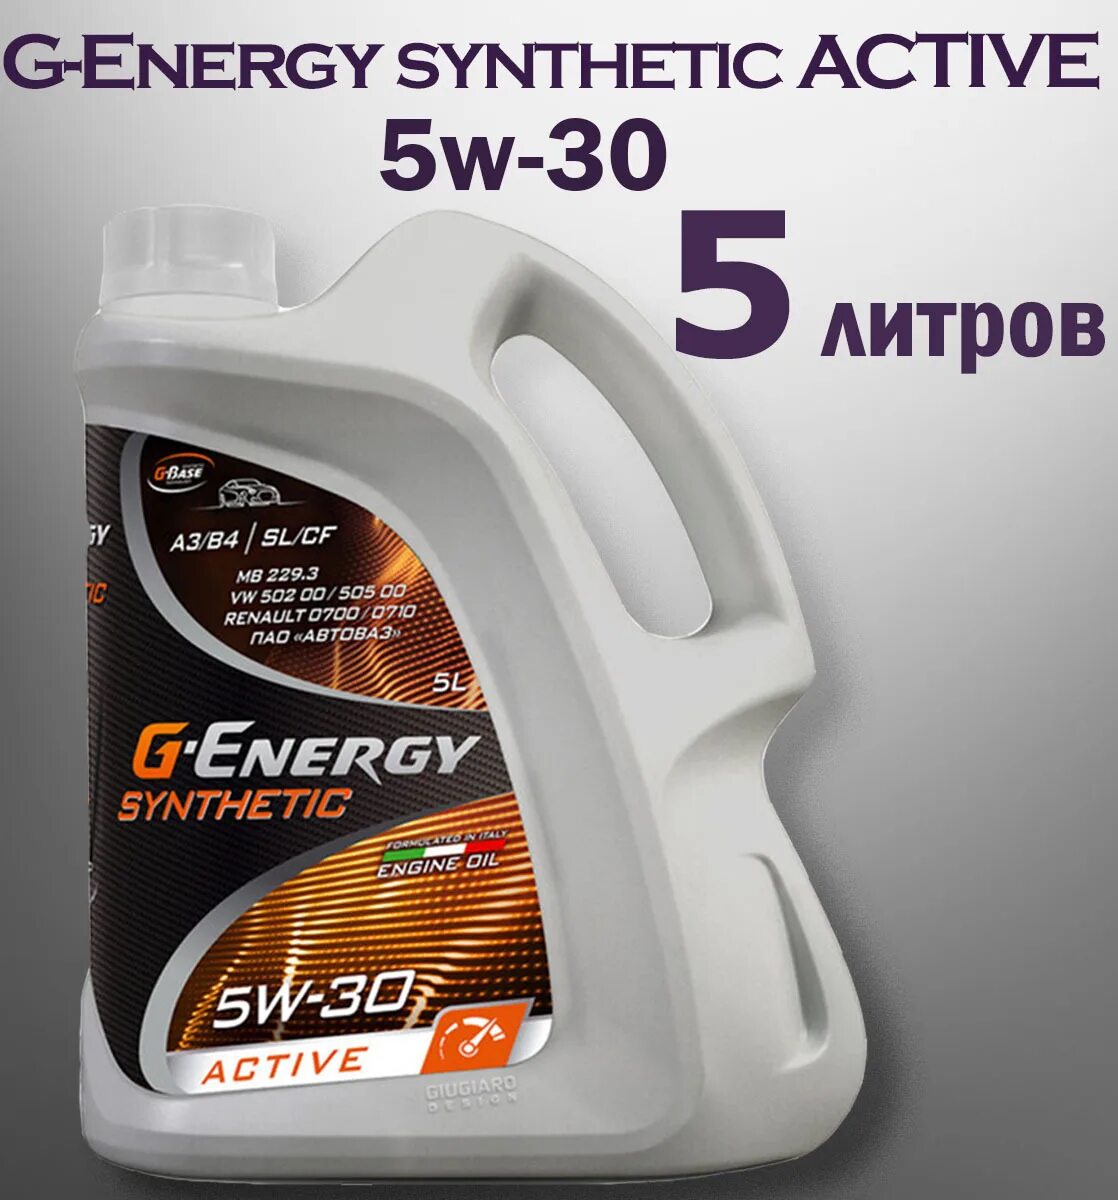 Масло g-Energy Syntetic Activ 5w30. G-Energy Synthetic Active 5w-30. G Energy 5w30 синтетика. G Энерджи 5w30 синтетика. Energy synthetic active 5w40